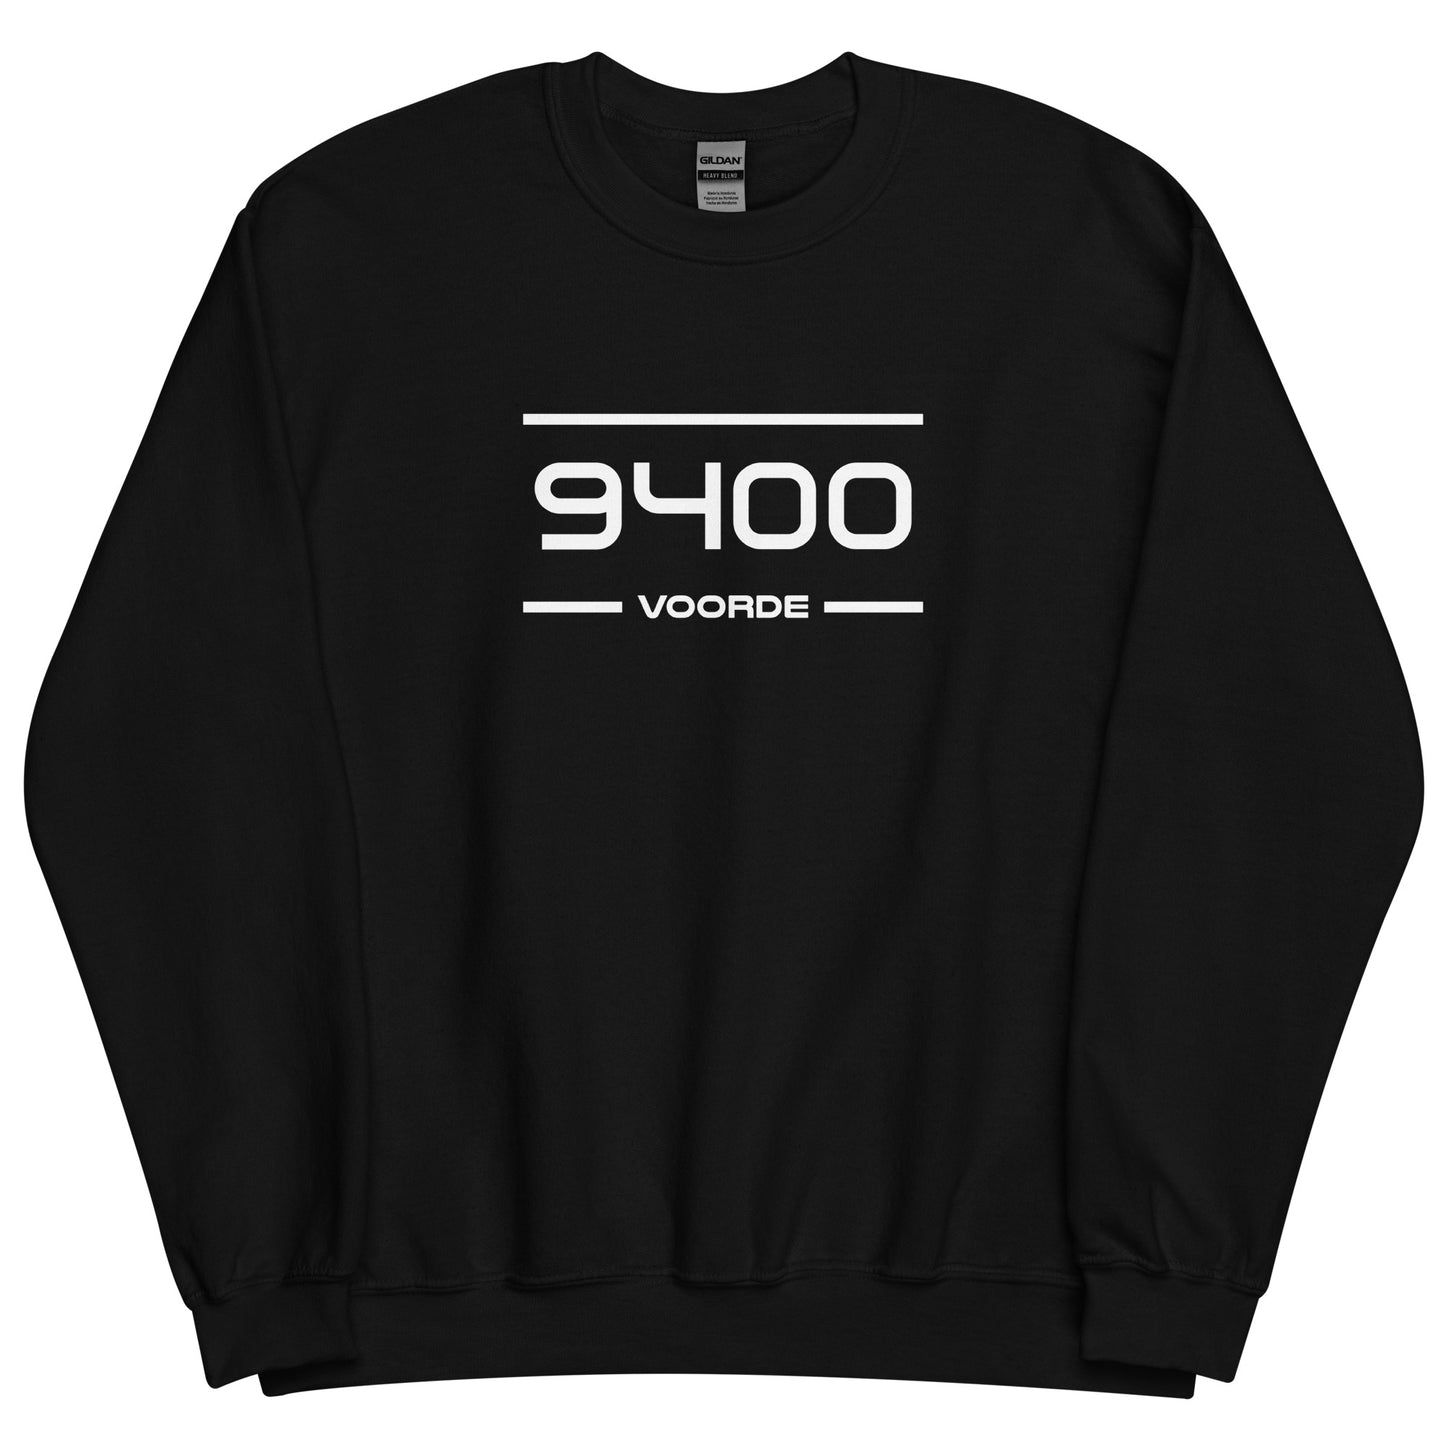 Sweater - 9400 - Voorde (M/V)